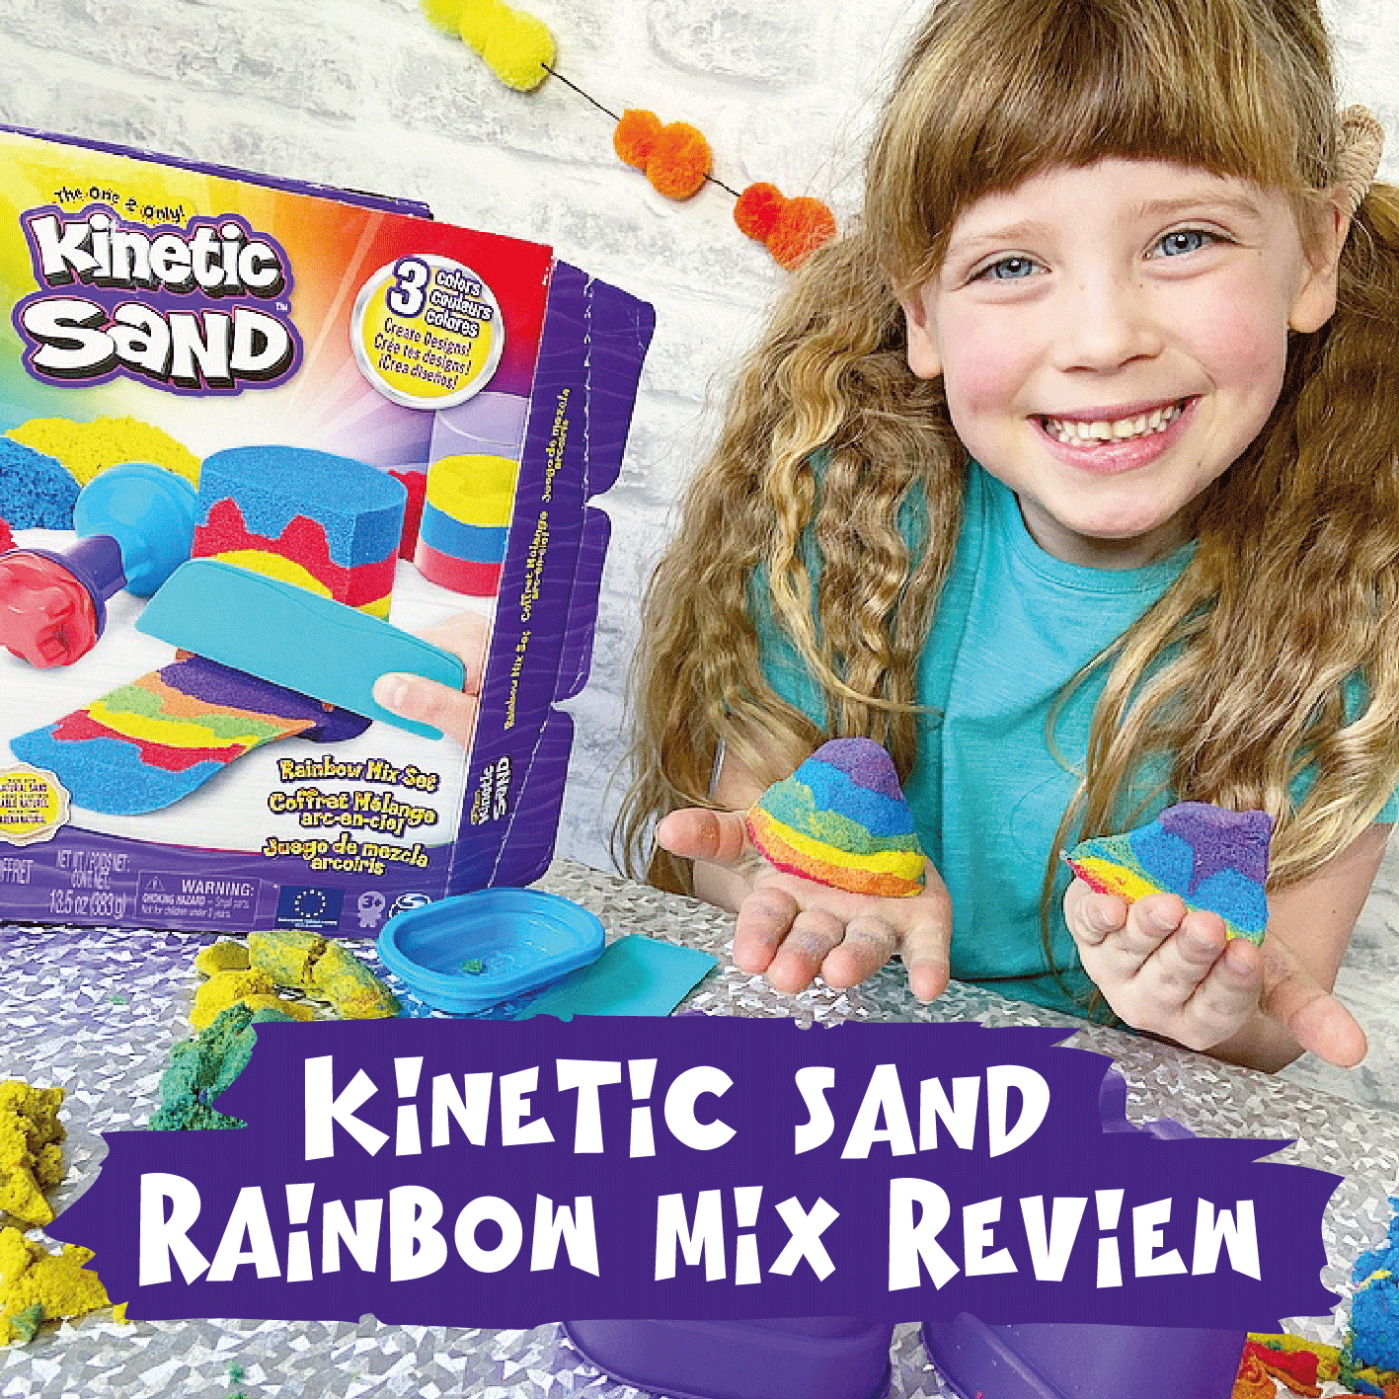 https://dearmummyblog.files.wordpress.com/2020/04/kinetic-sand-rainbow-mix-review-sq.png?w=1400